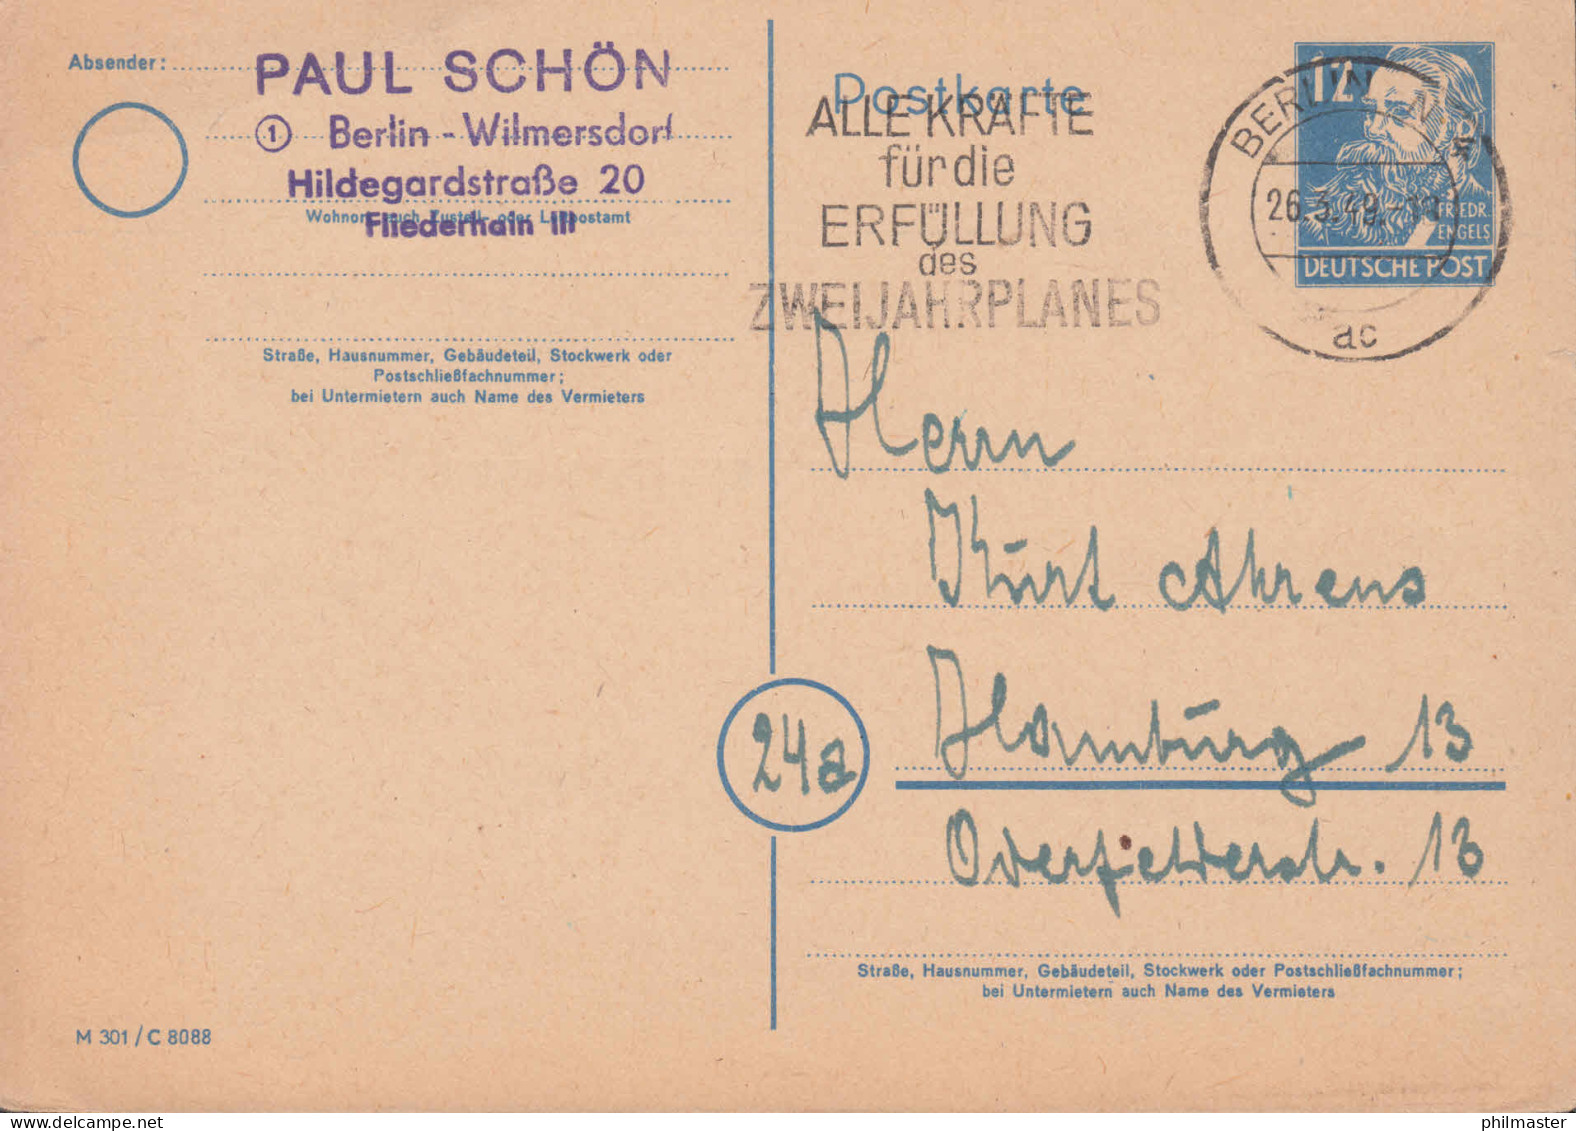 Postkarte P 36a/01 Engels 12 Pf DV M 301 / C 8088, BERLIN Zweijahrplan 26.3.49 - Covers & Documents